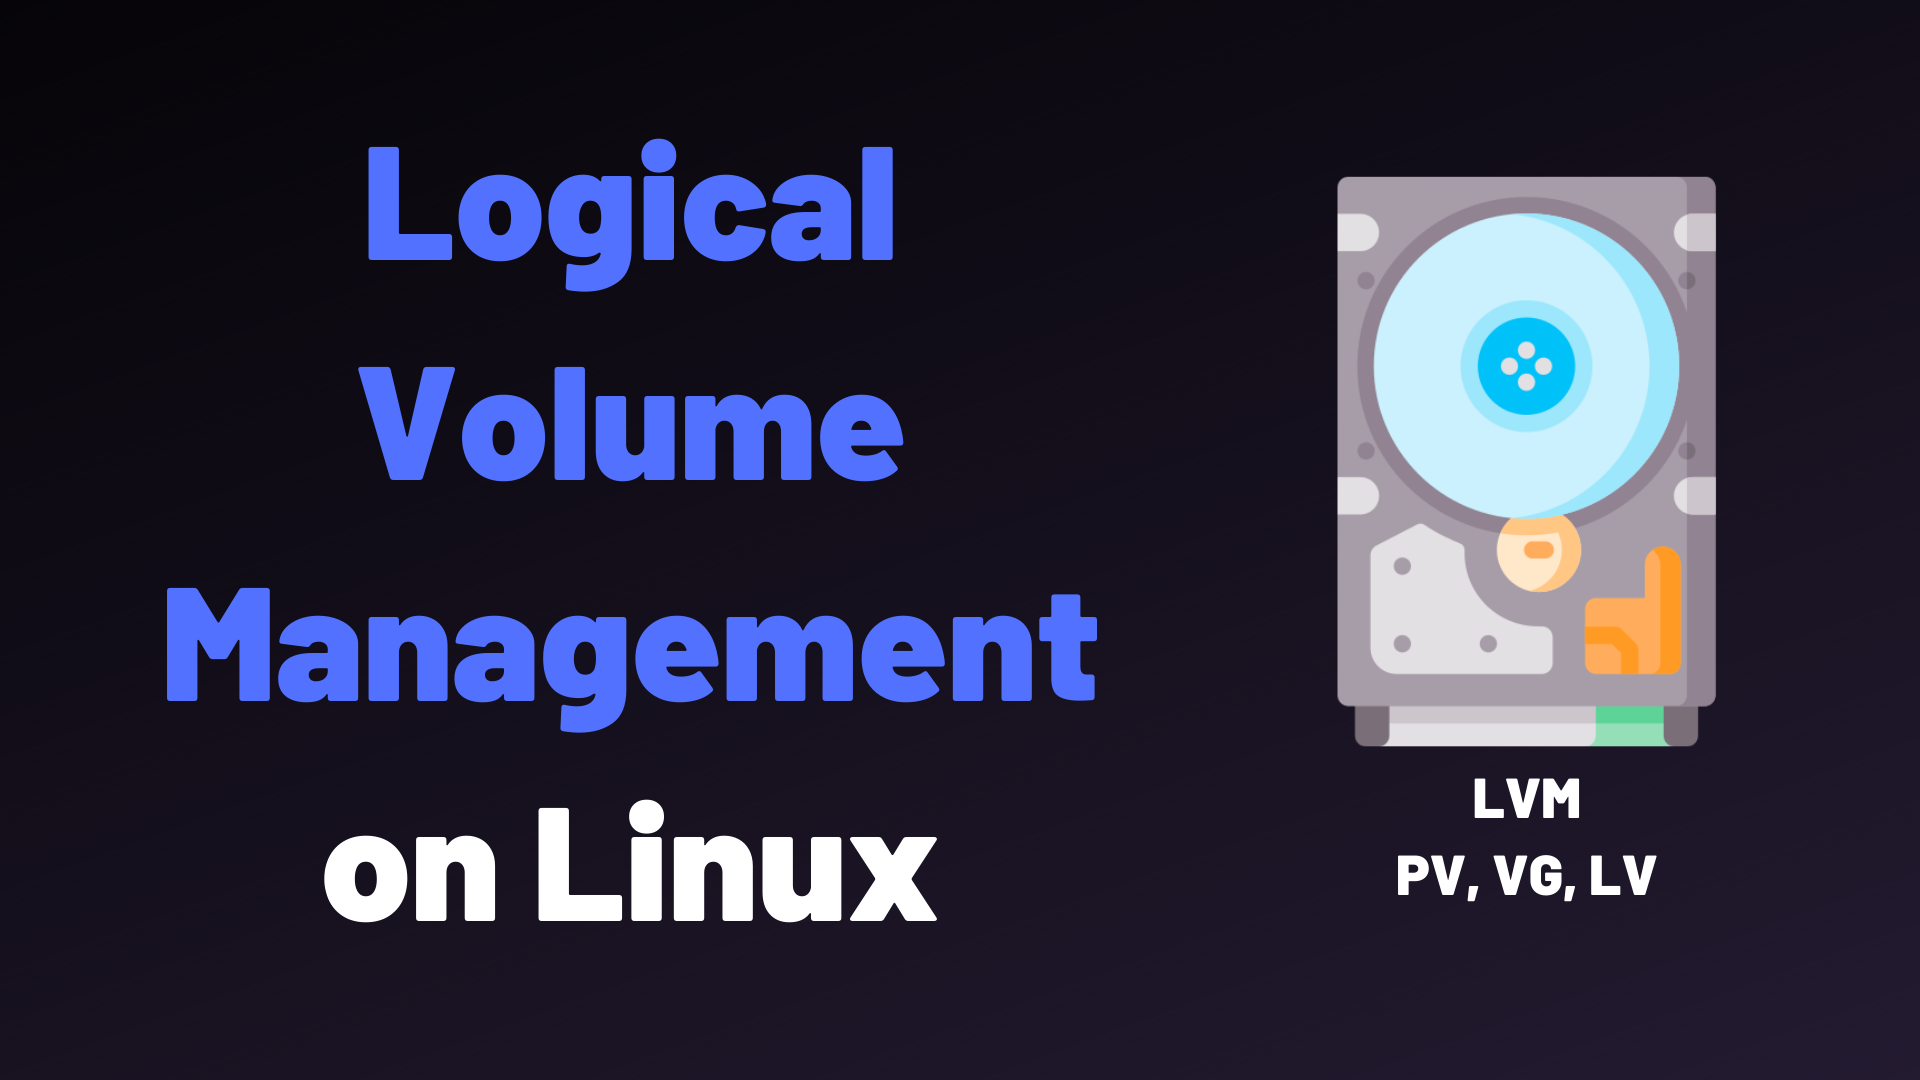 Logical Volume Management Explained on Linux